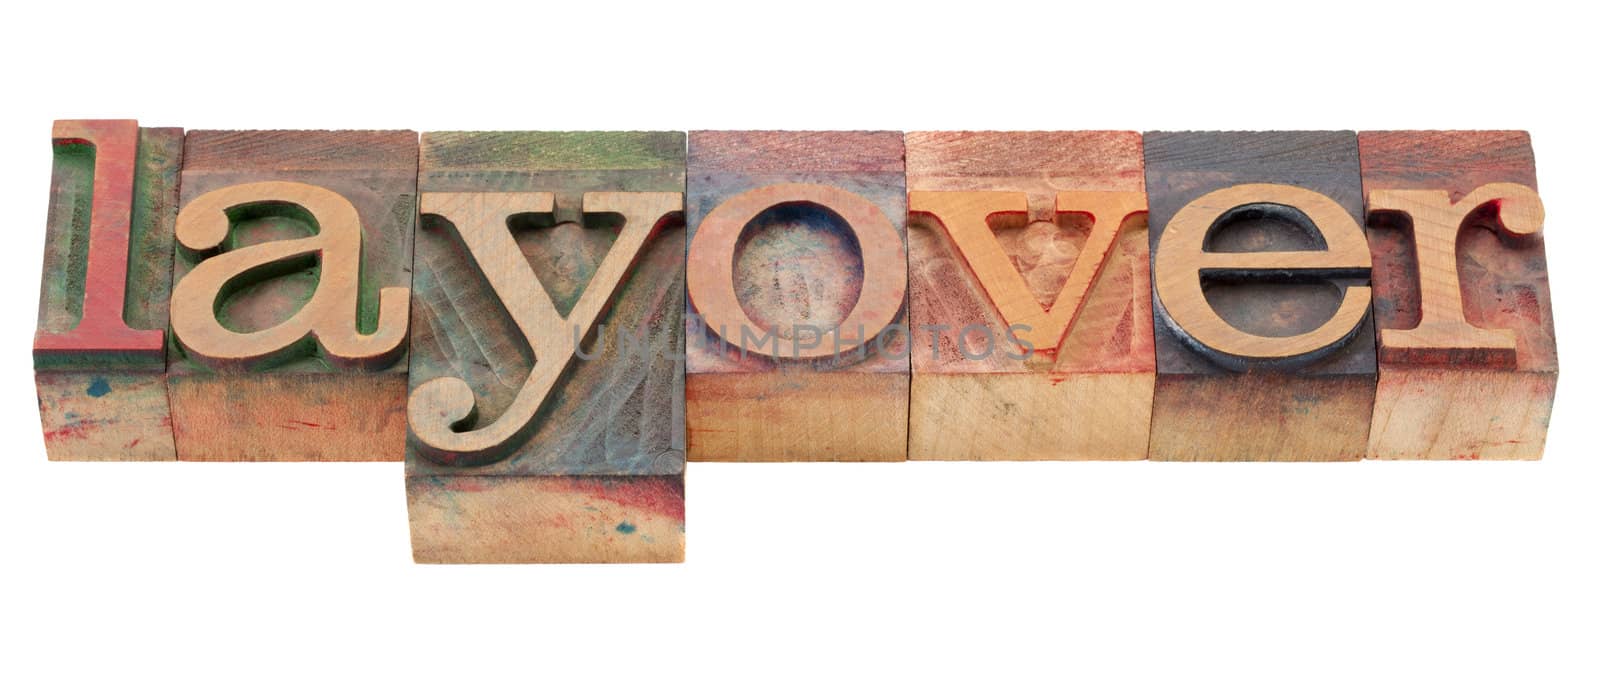 layover -isolated word in vintage wood letterpress printing blocks